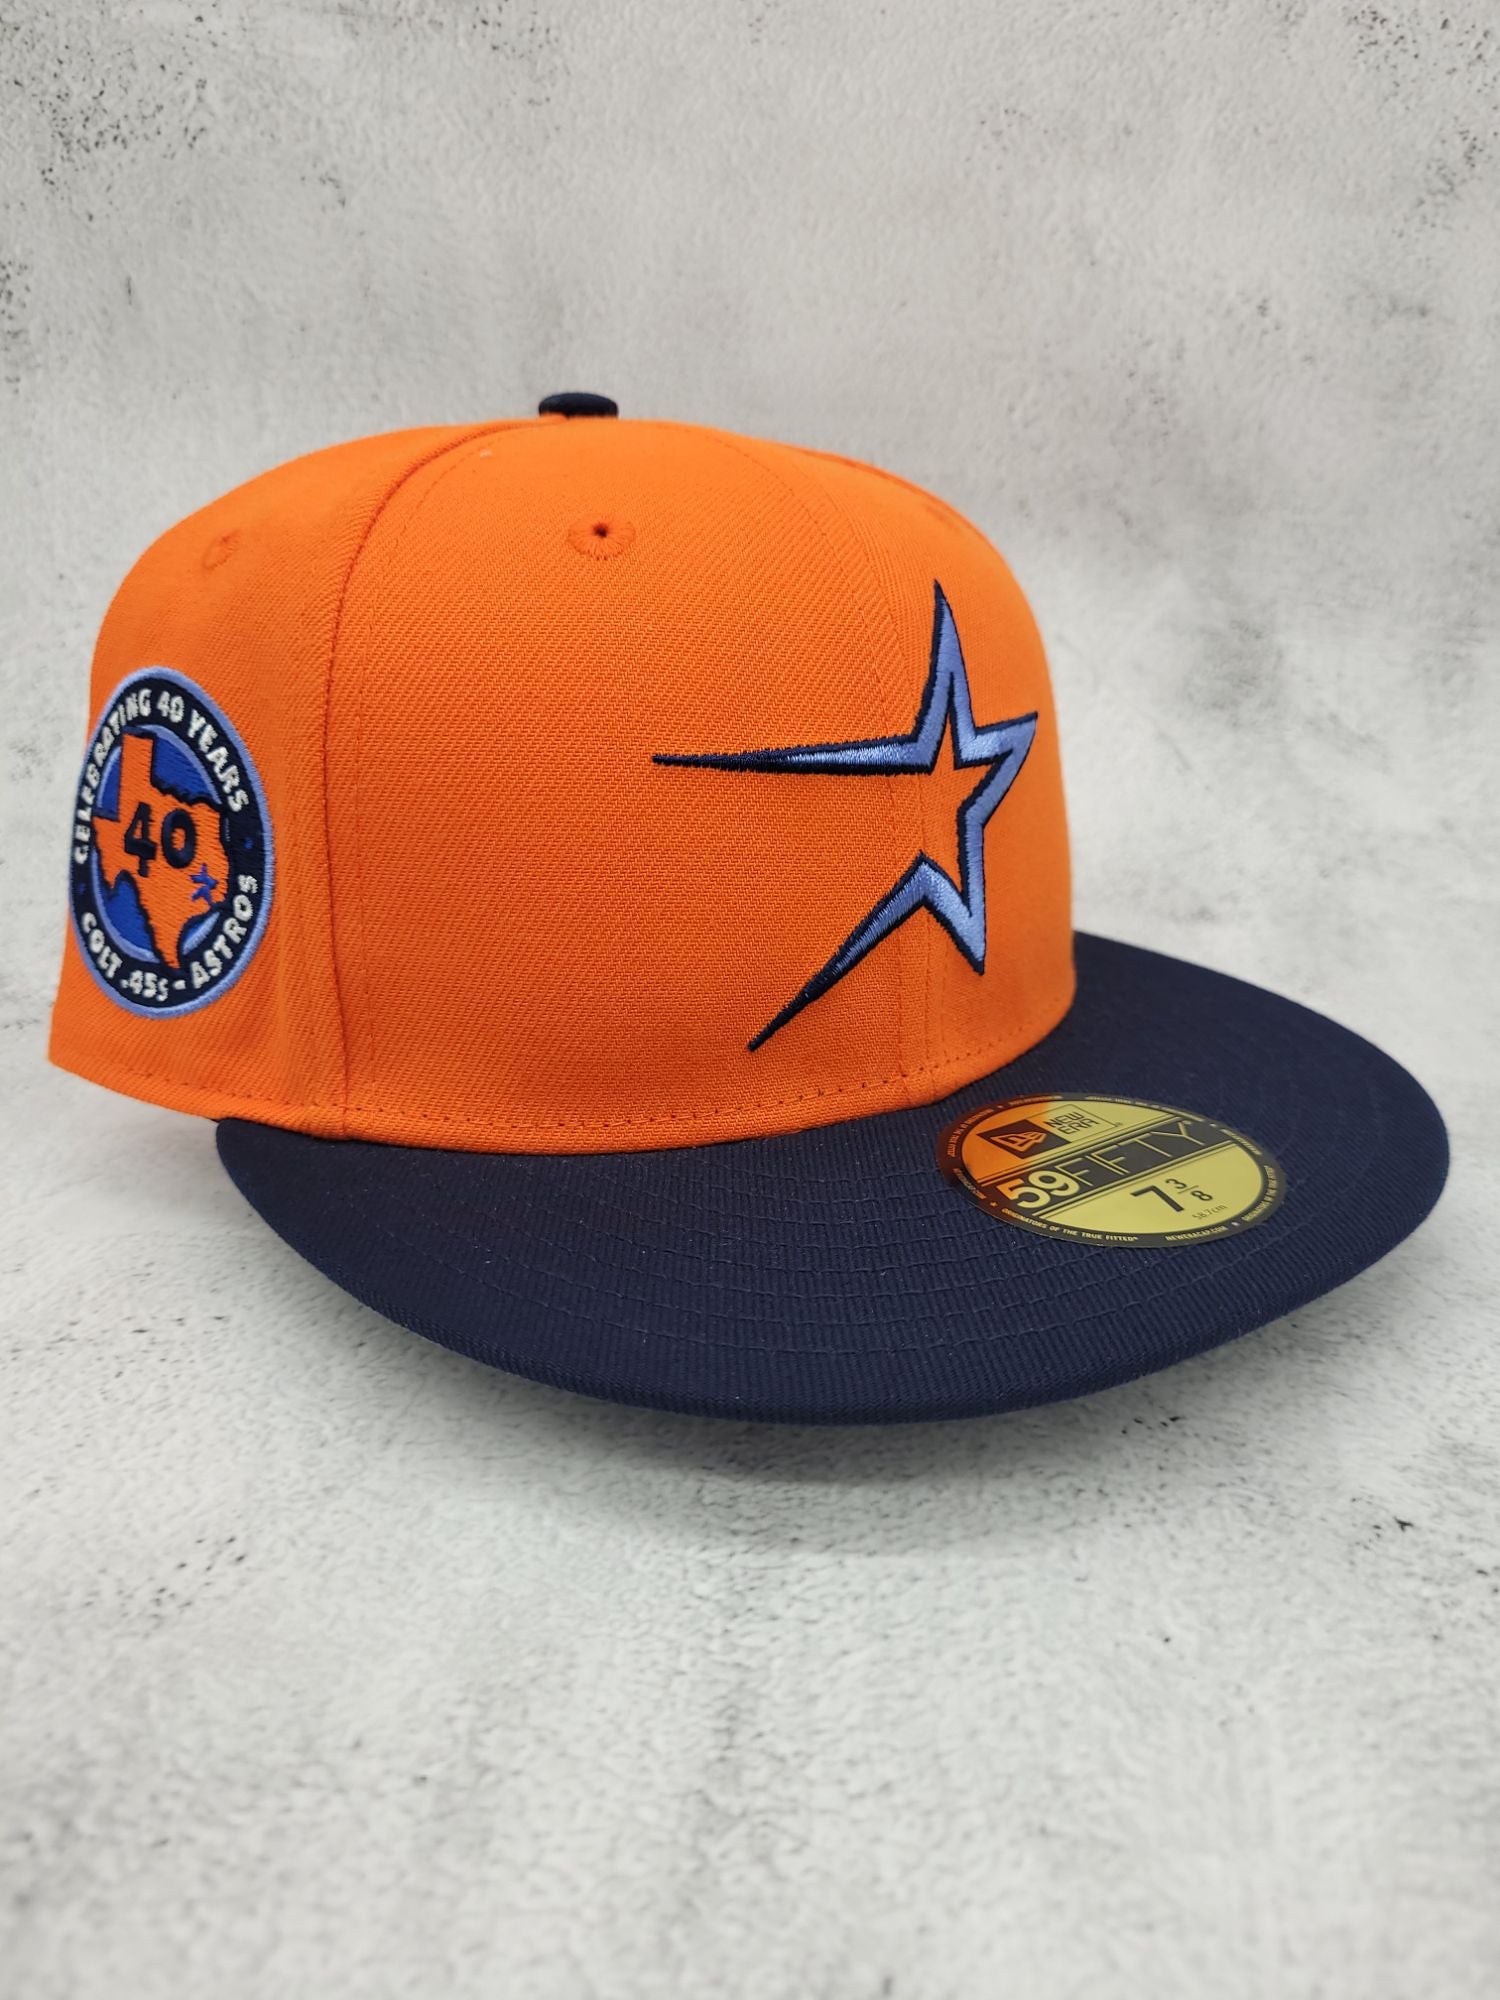 Men's Houston Astros New Era Stone/Navy Retro 59FIFTY Fitted Hat